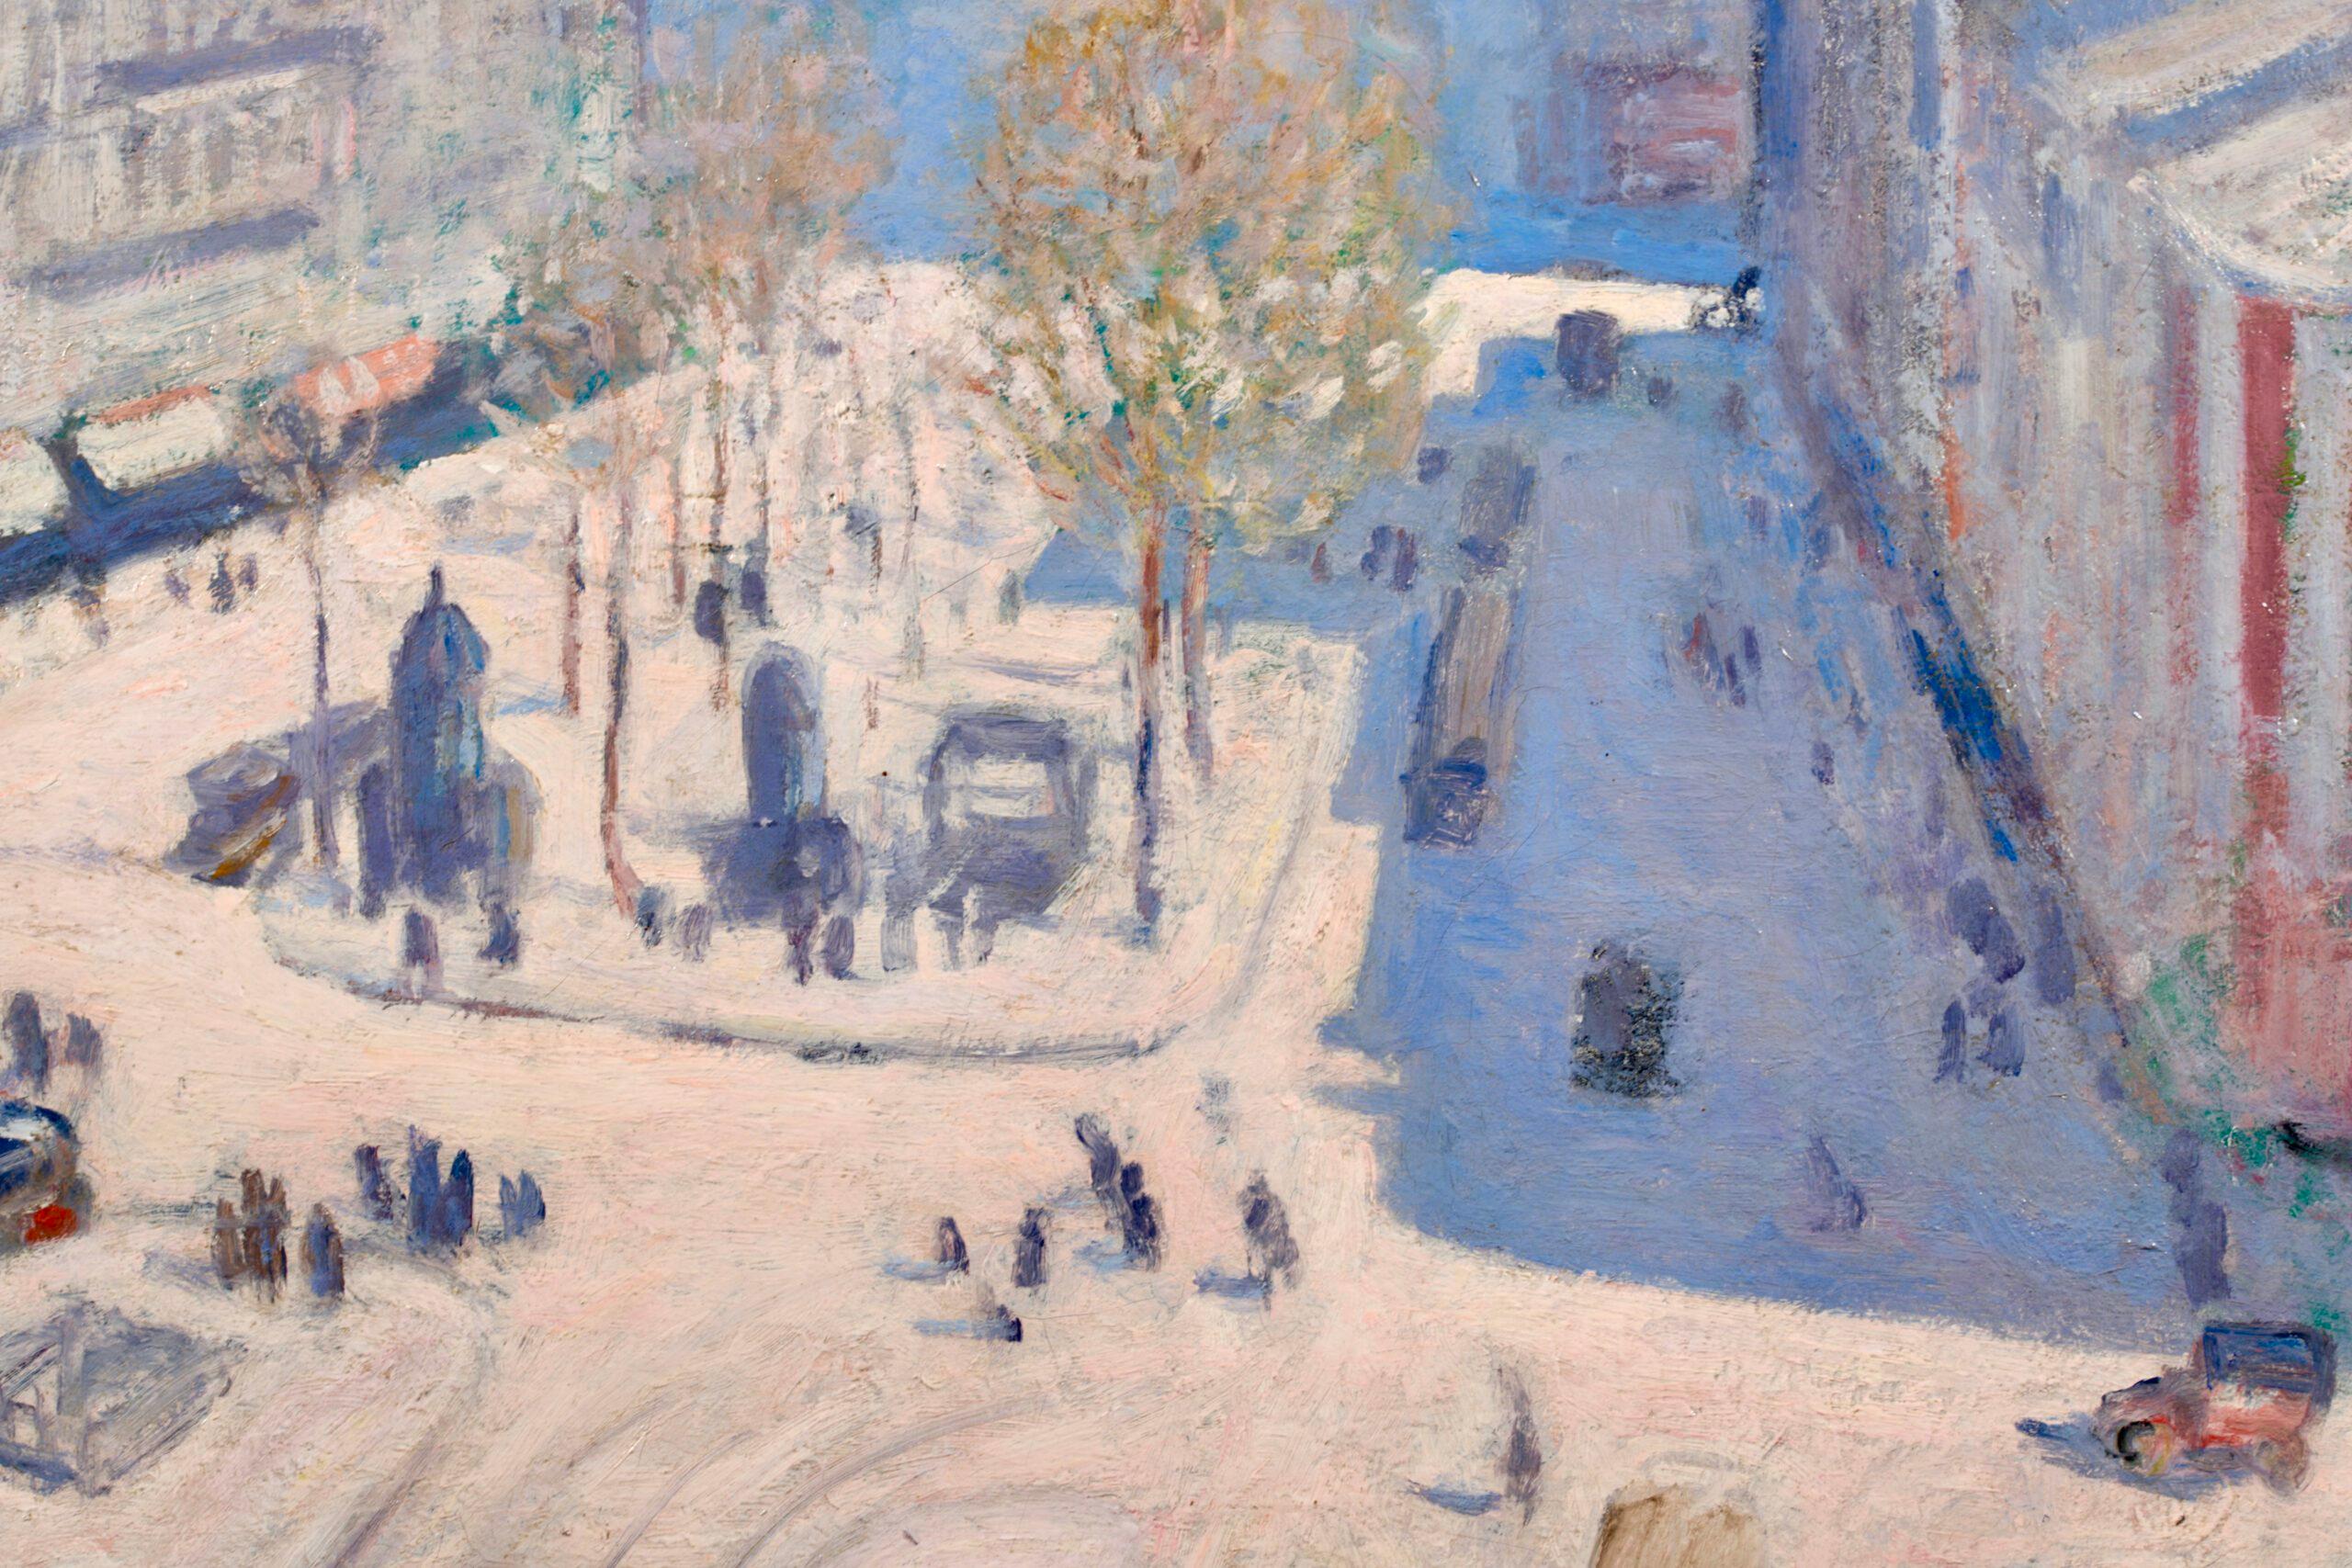 Boulevard De Clichy - Post Impressionist City Landscape Painting by Albert Andre For Sale 7